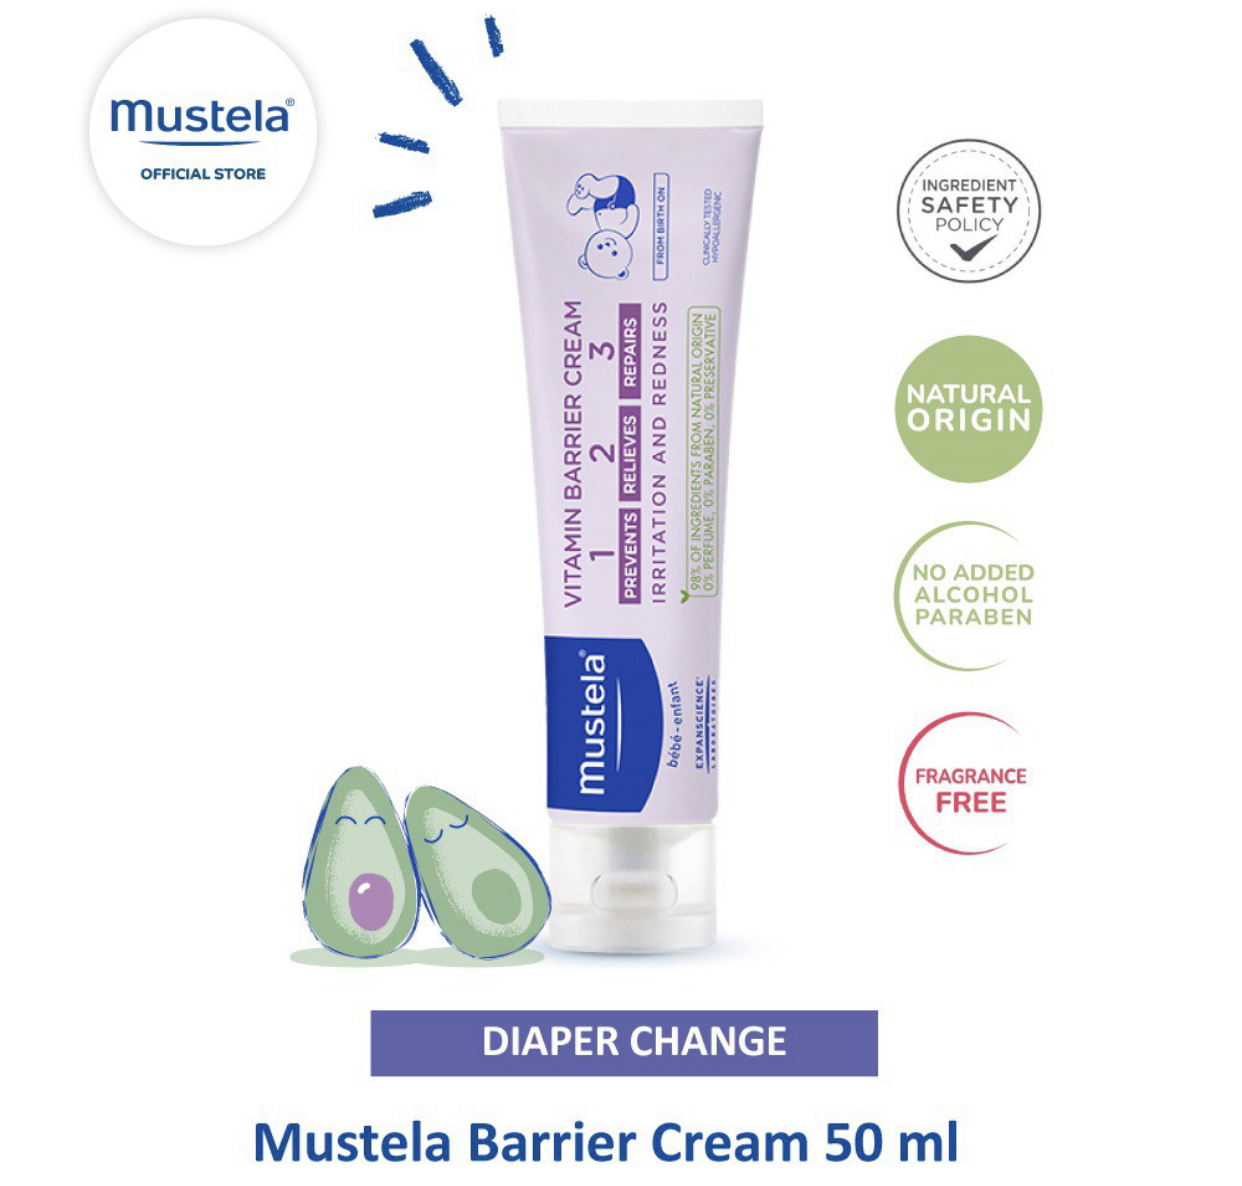 4. Mustela Barrier Cream 